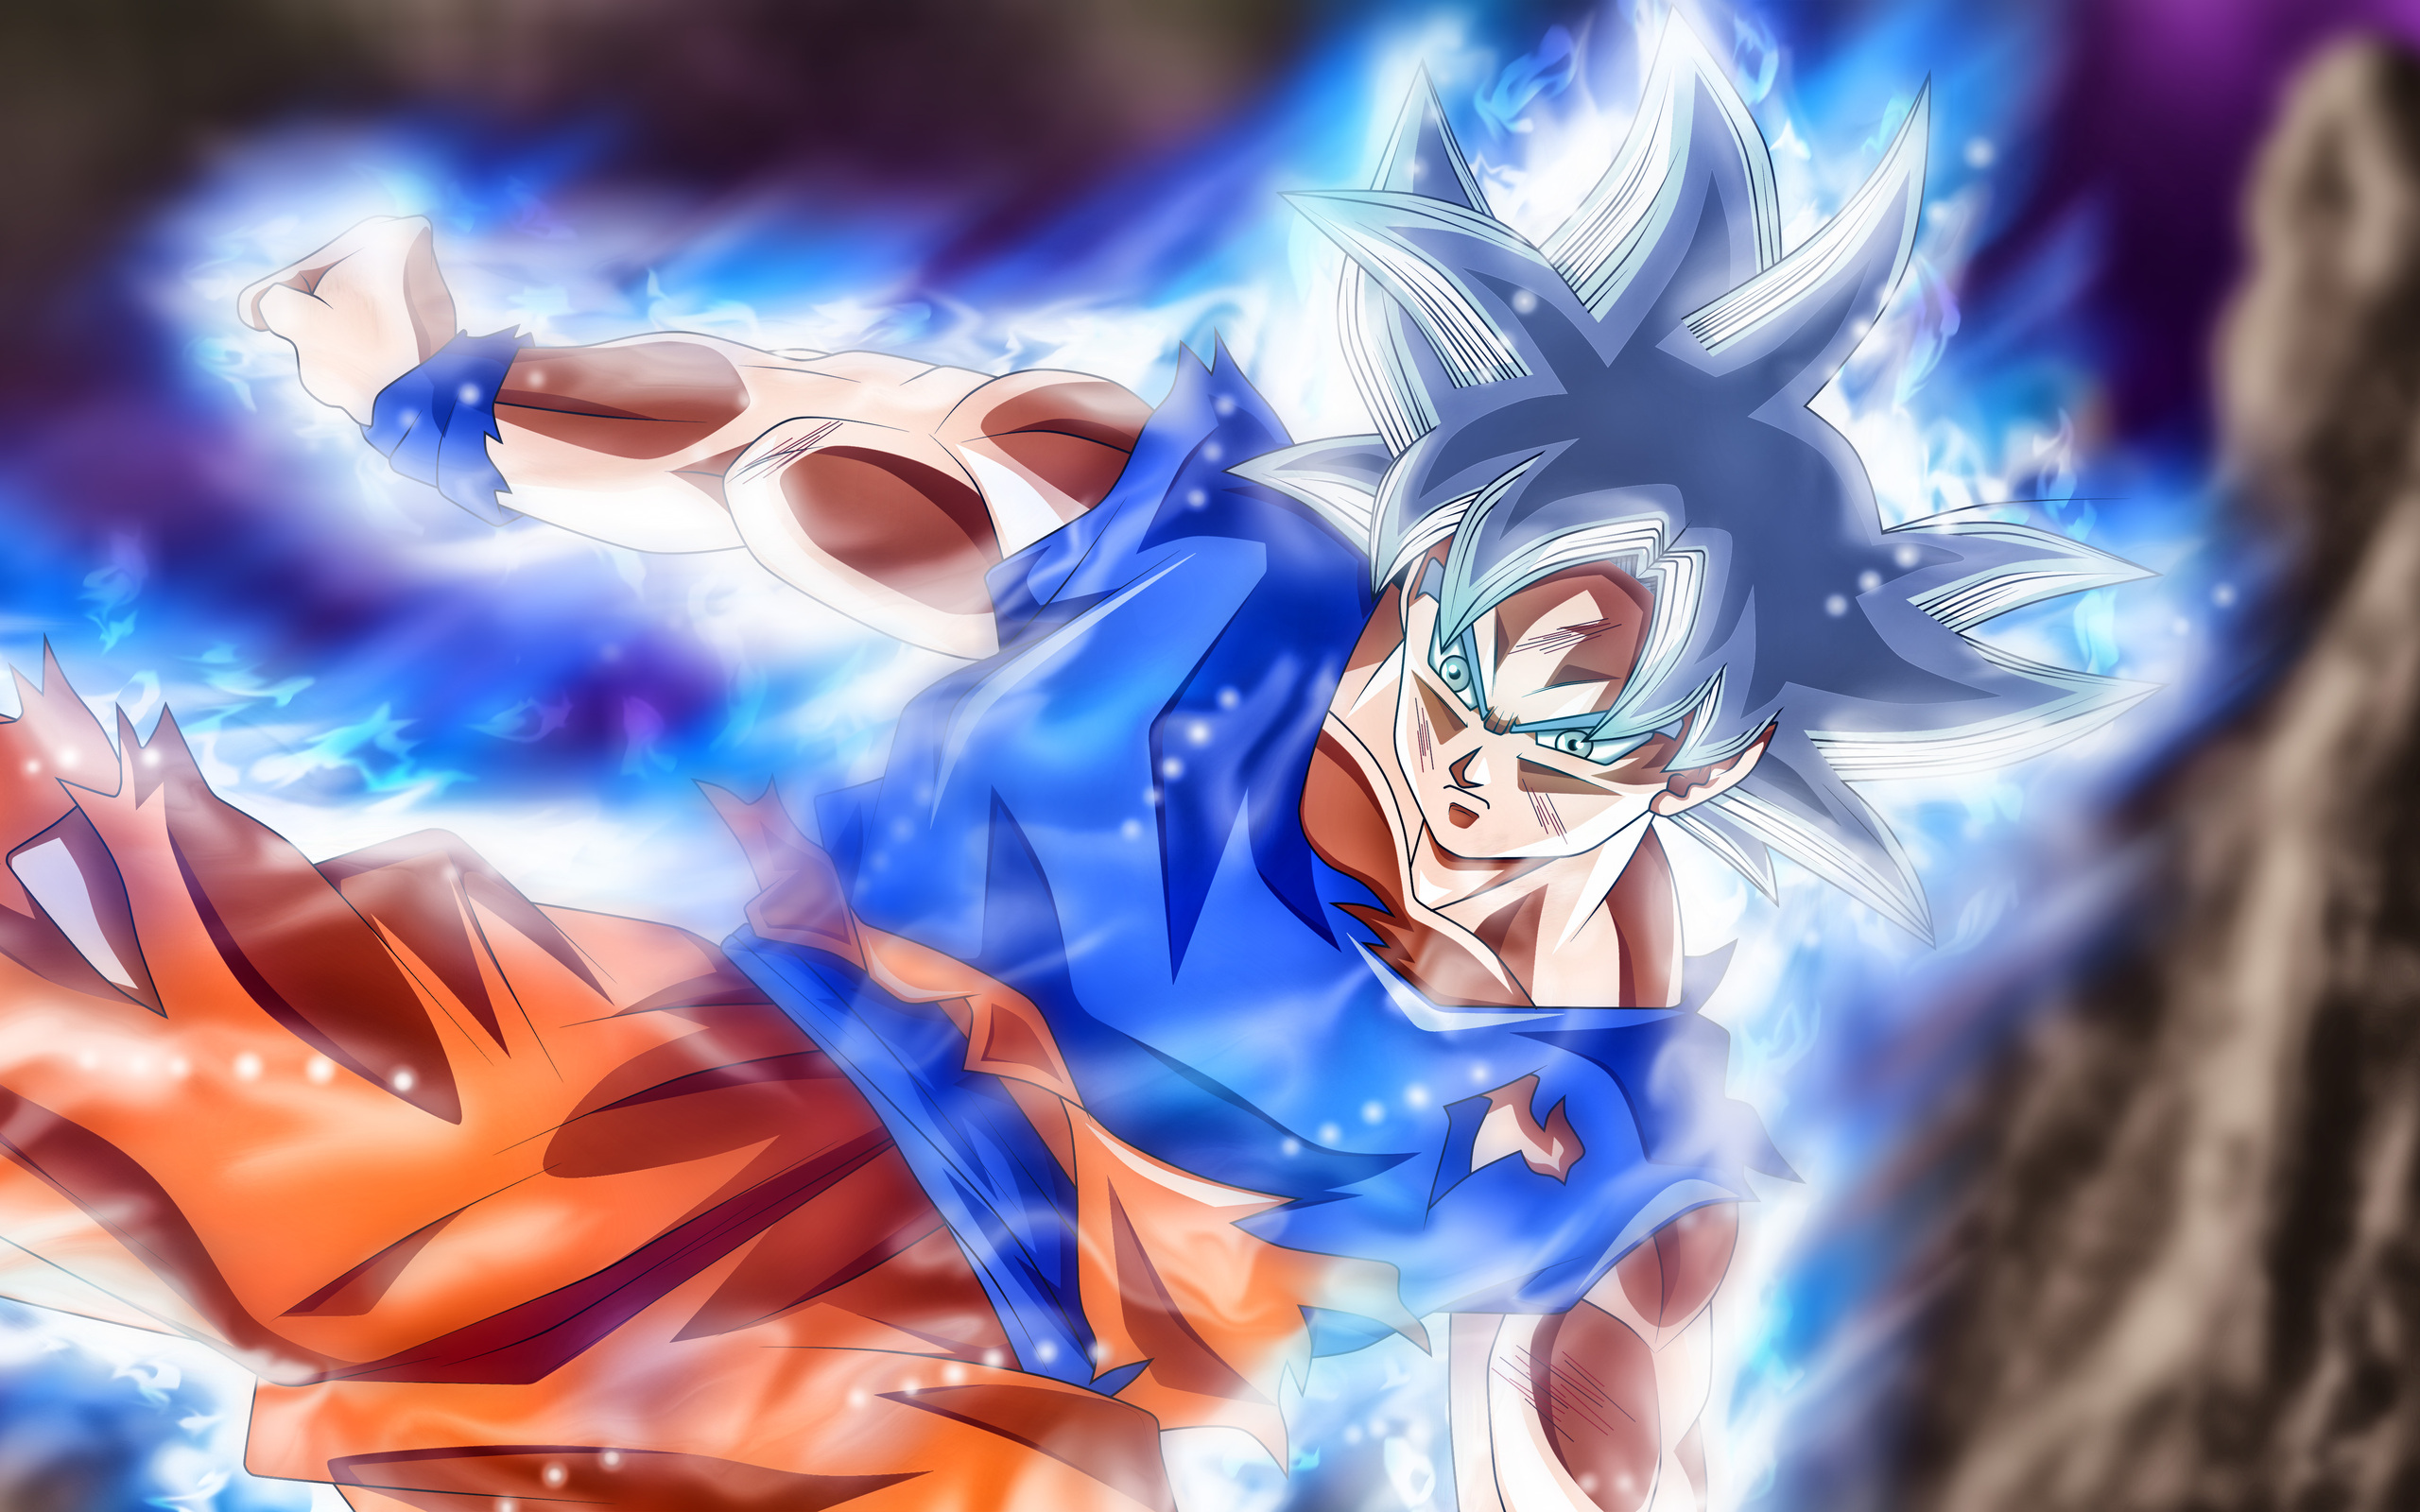 21+ Goku Ultra Instinct Wallpaper Hd Download Images - OLED Wallpaper